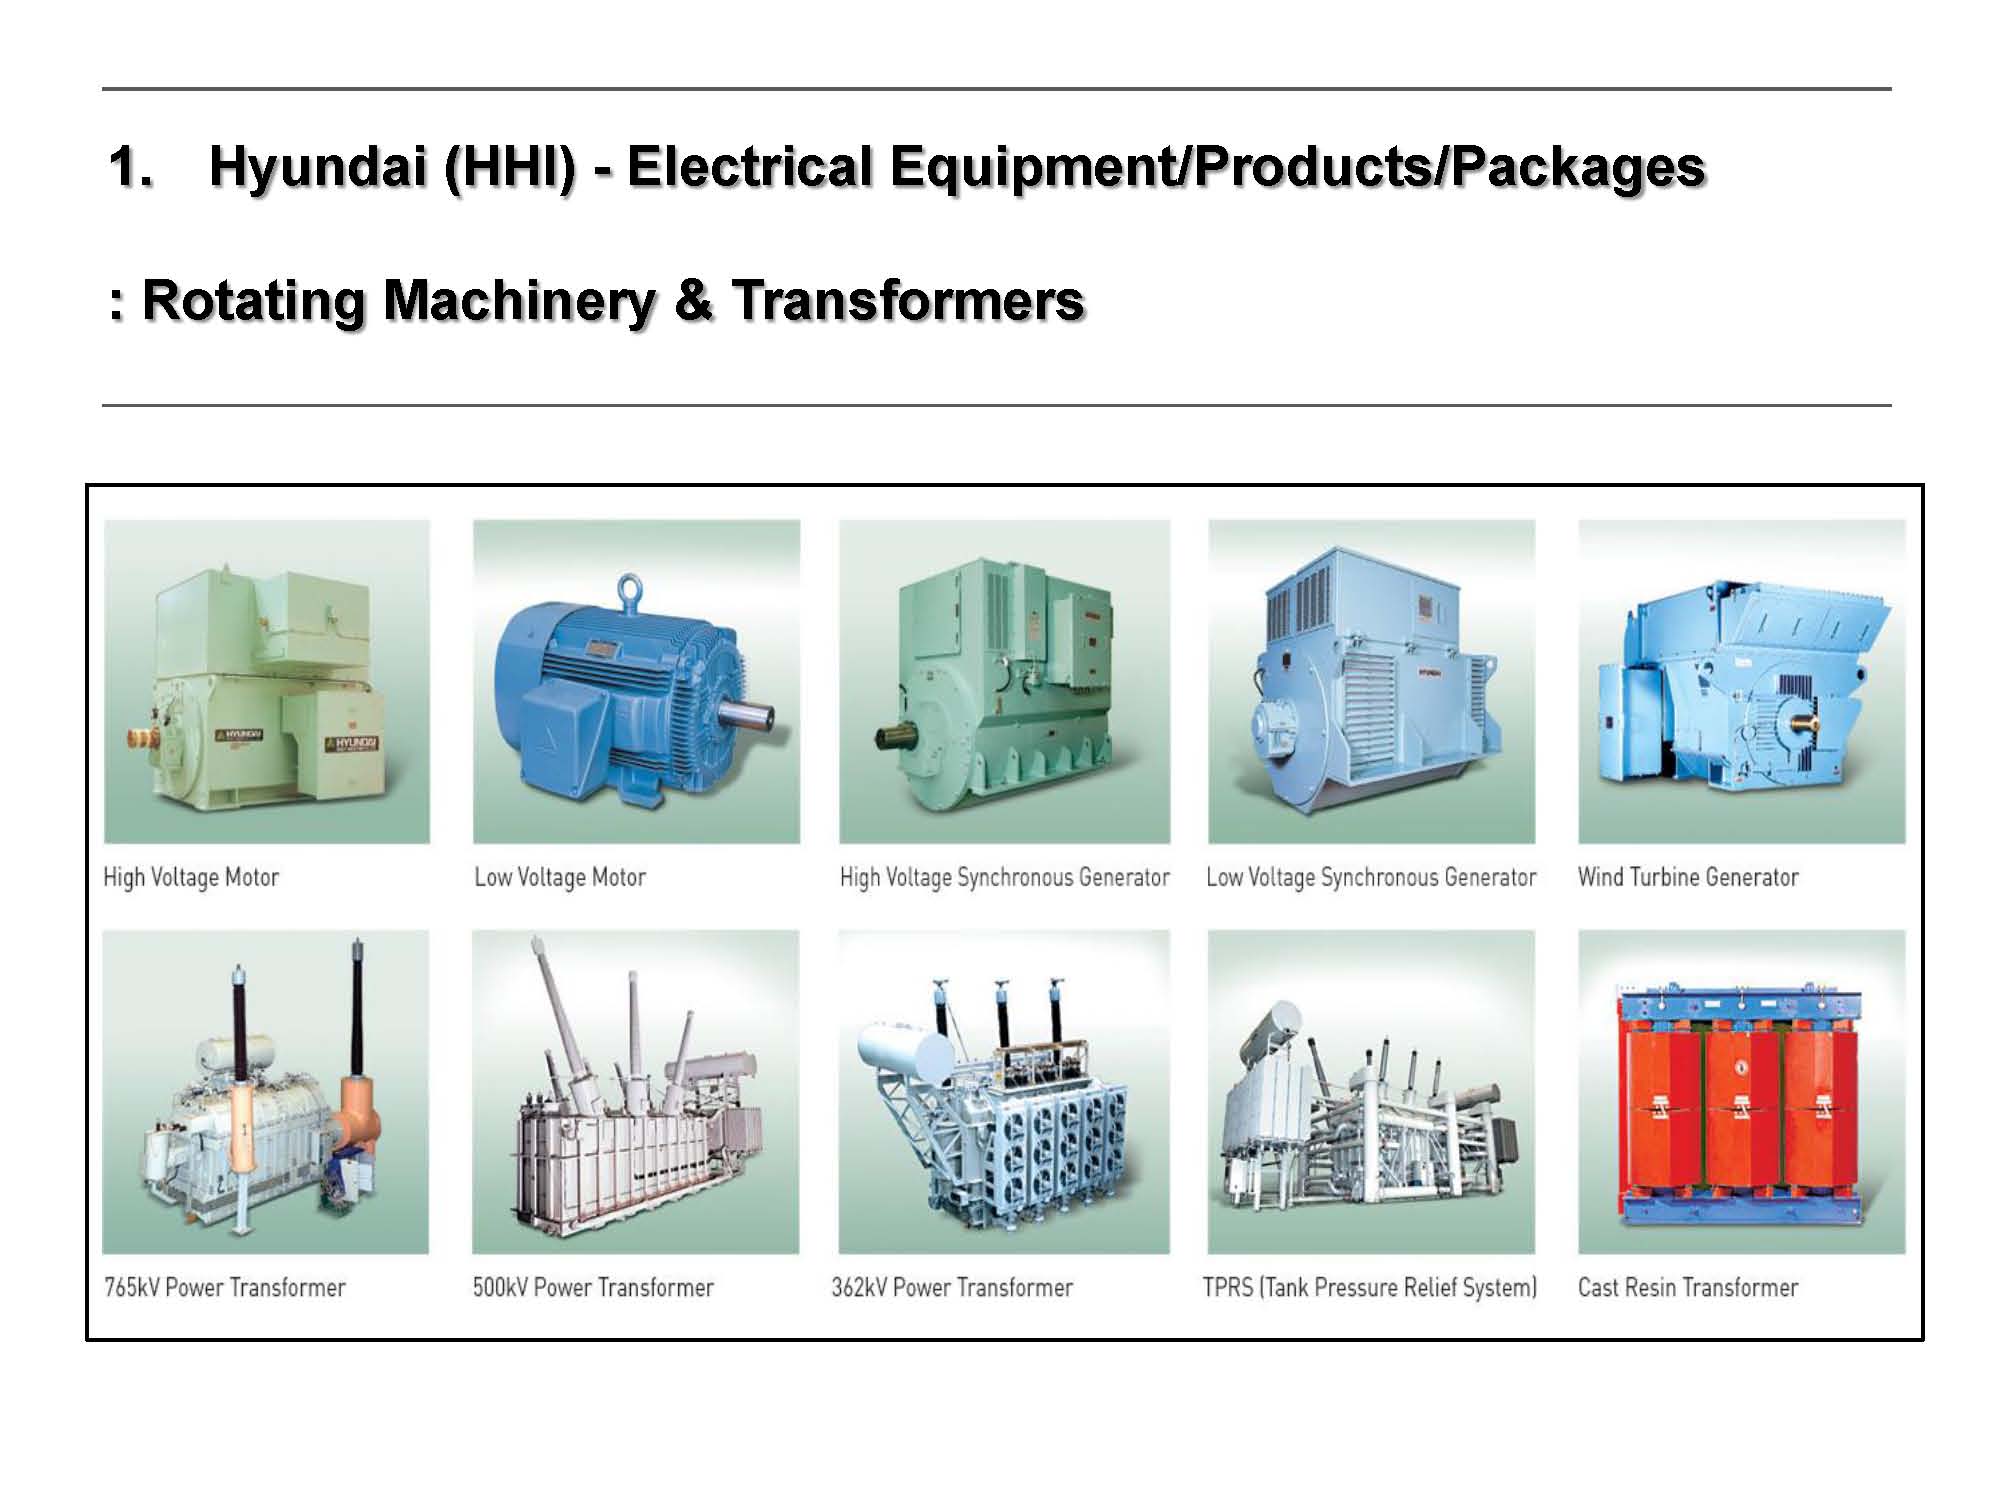 Hyundai Electrical Equipment (Motor, Trans...